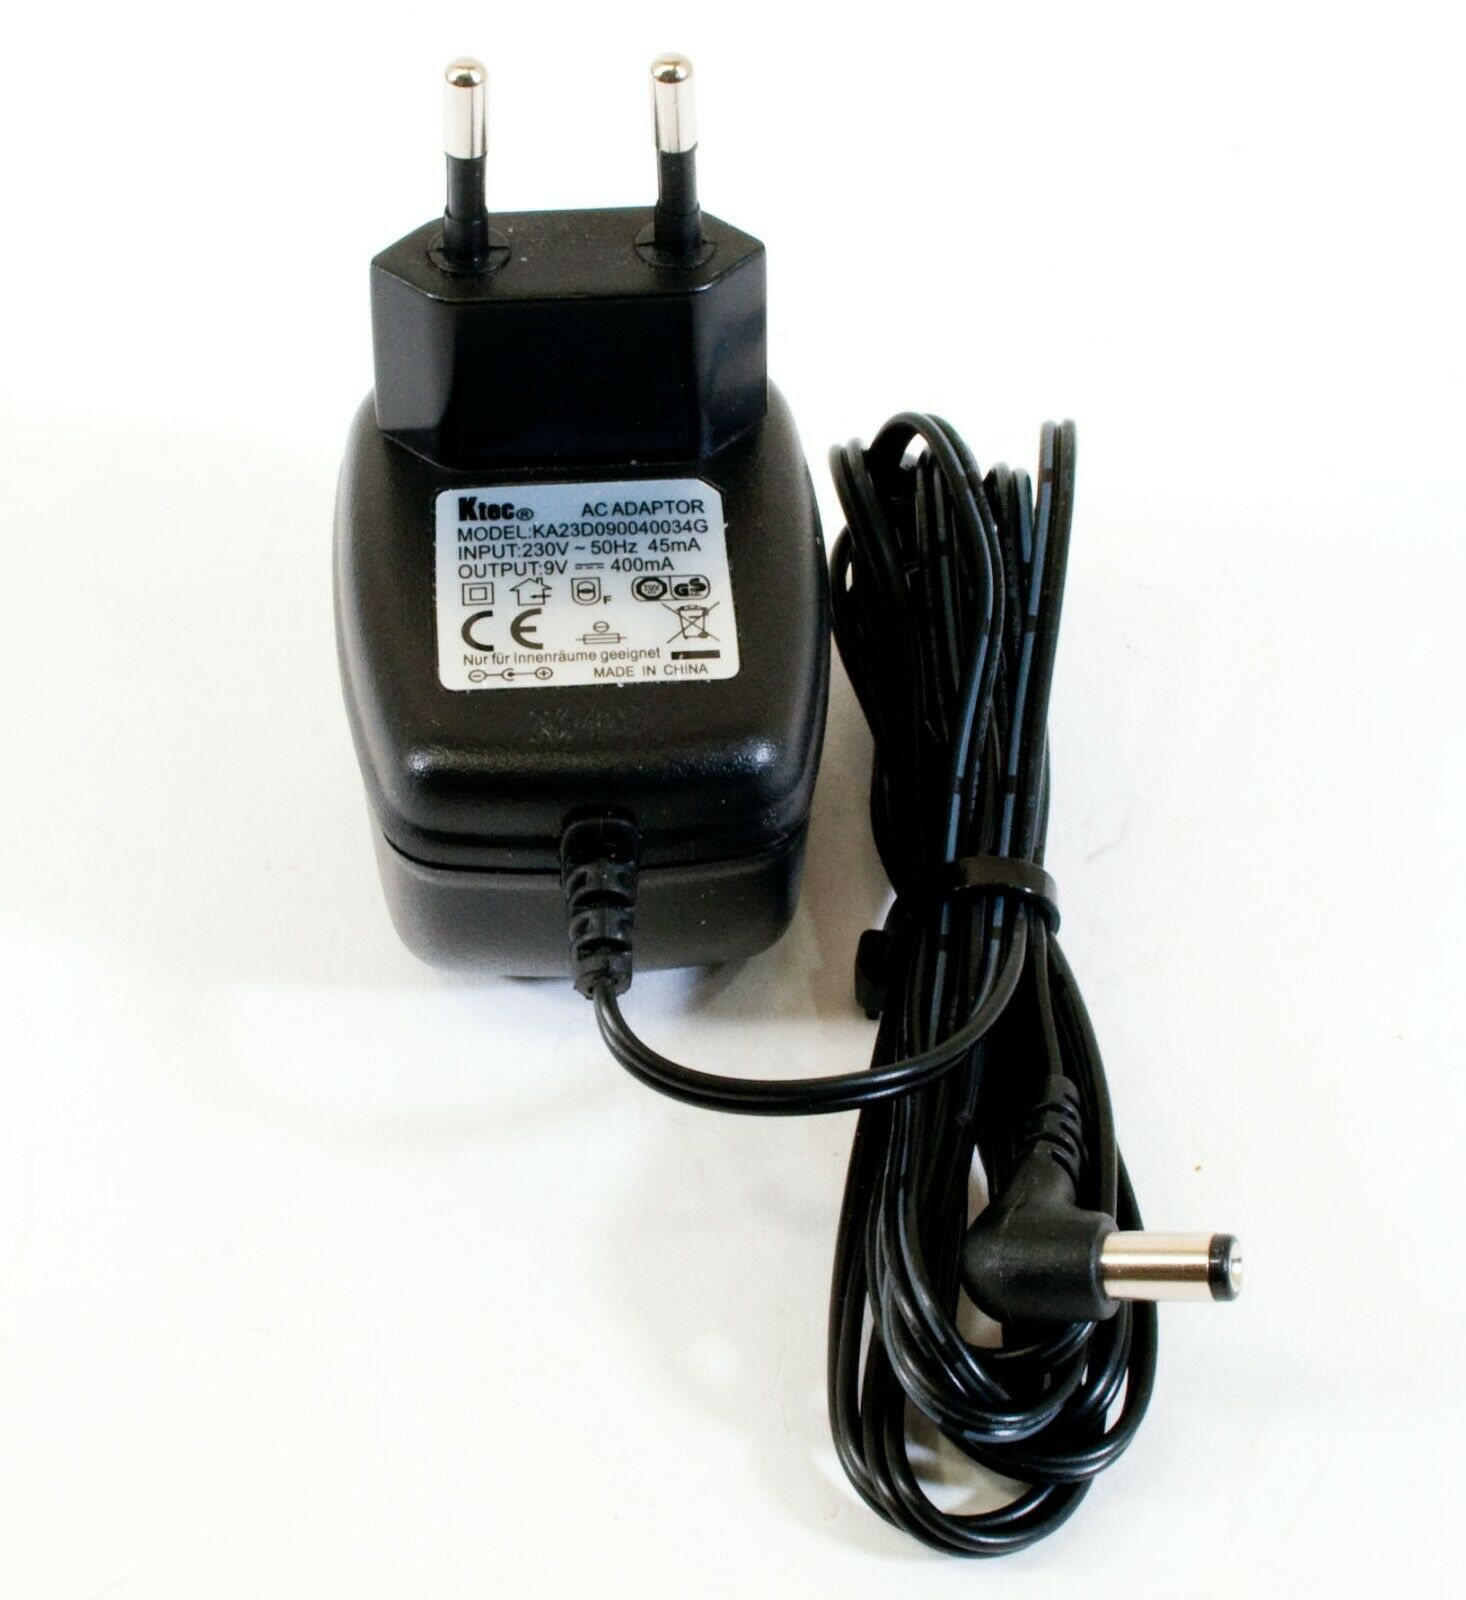 Ktec KA23D090040034G AC Adapter 9V 400mA Original Power Supply Output Current: 400 mA Voltage: 9 V MPN: KA23D090040034